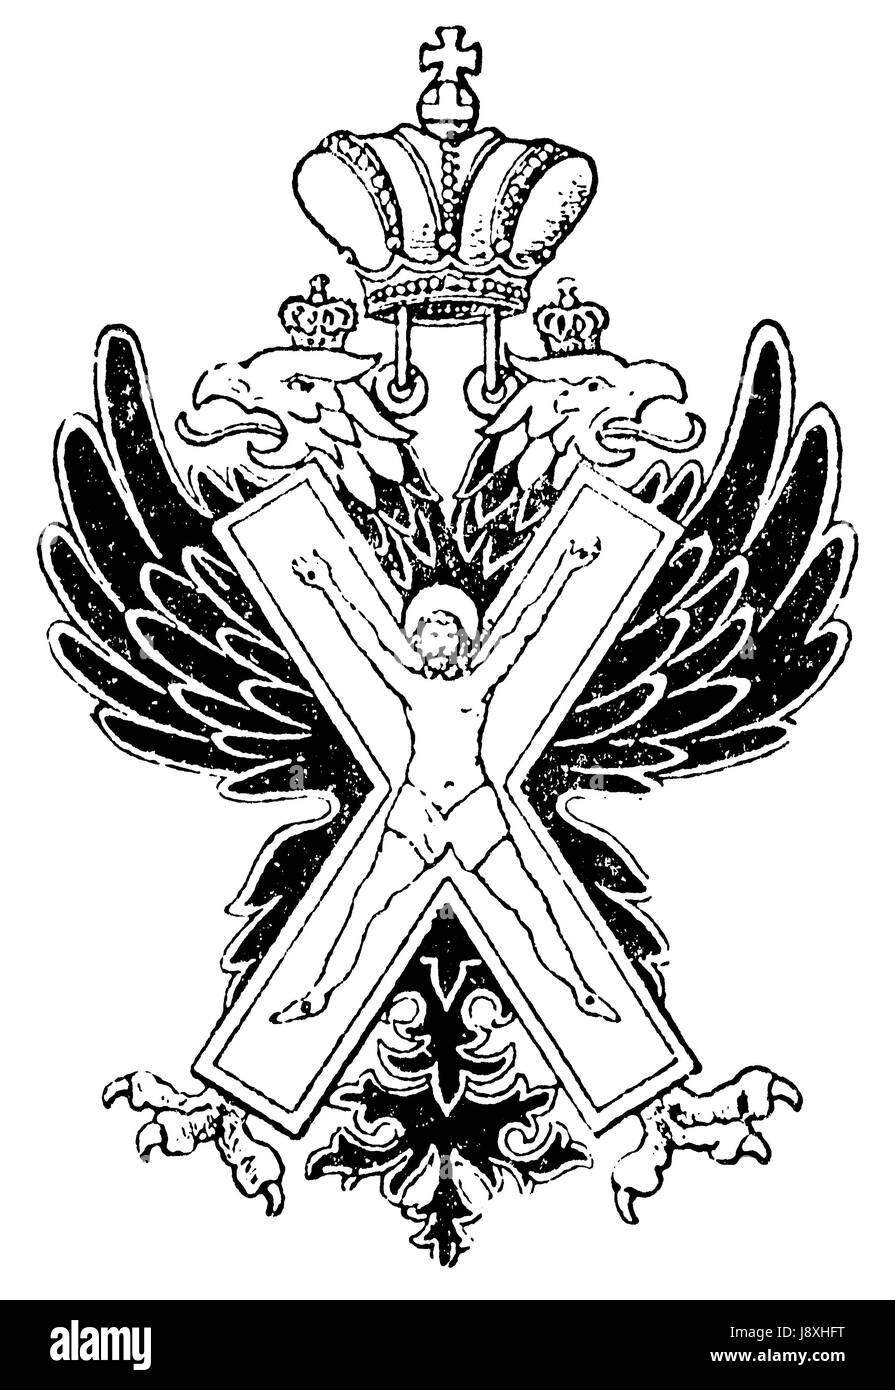 crucifix, saint, order, emblem, cross, black, swarthy, jetblack, deep black, Stock Photo